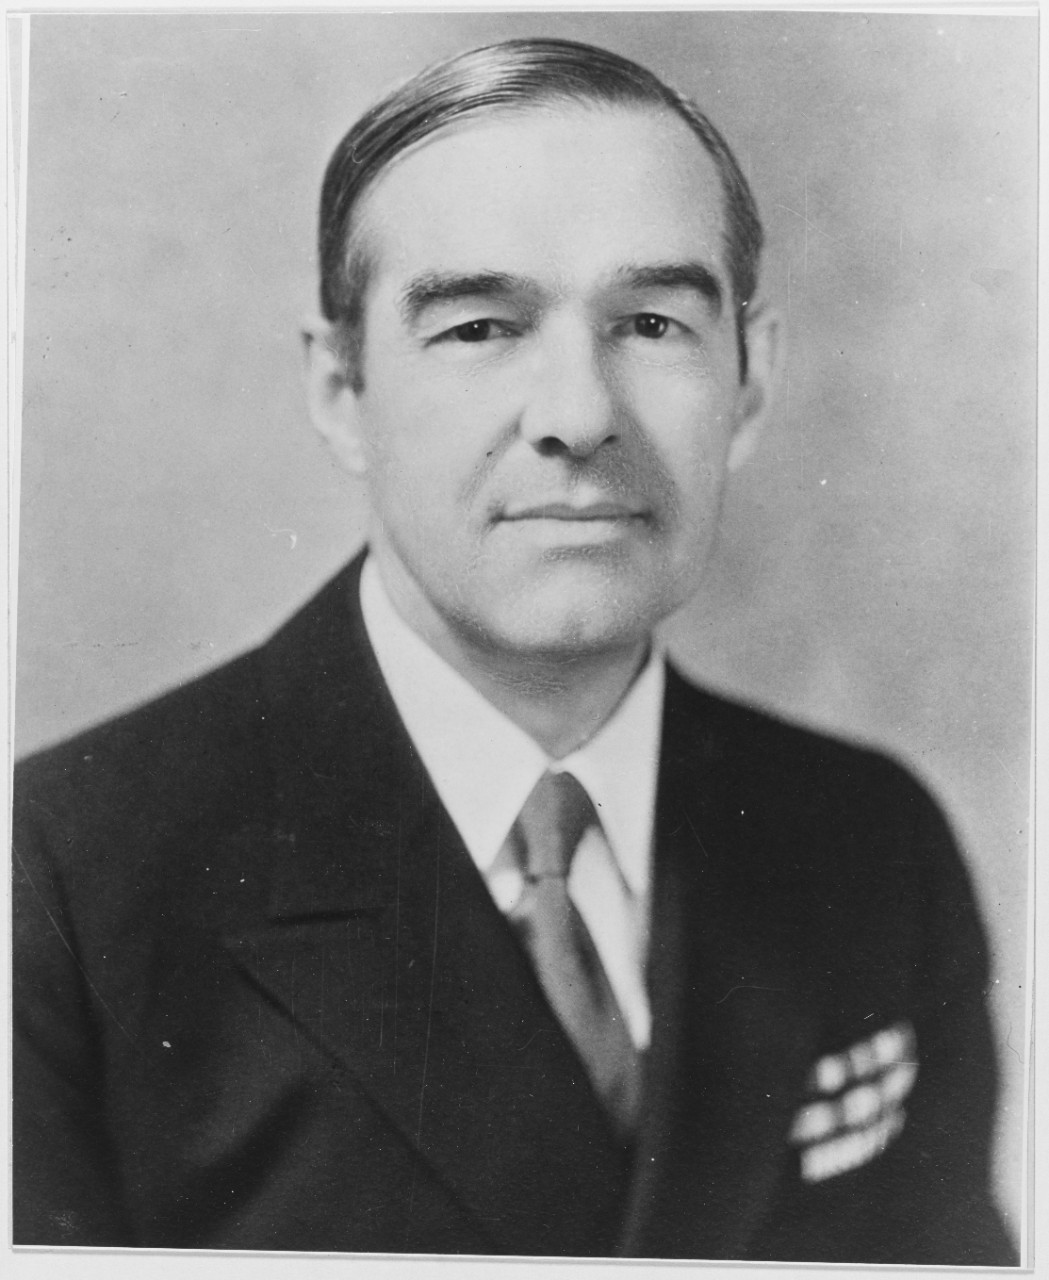 Captain Charles W. Fisher Jr., USN CC